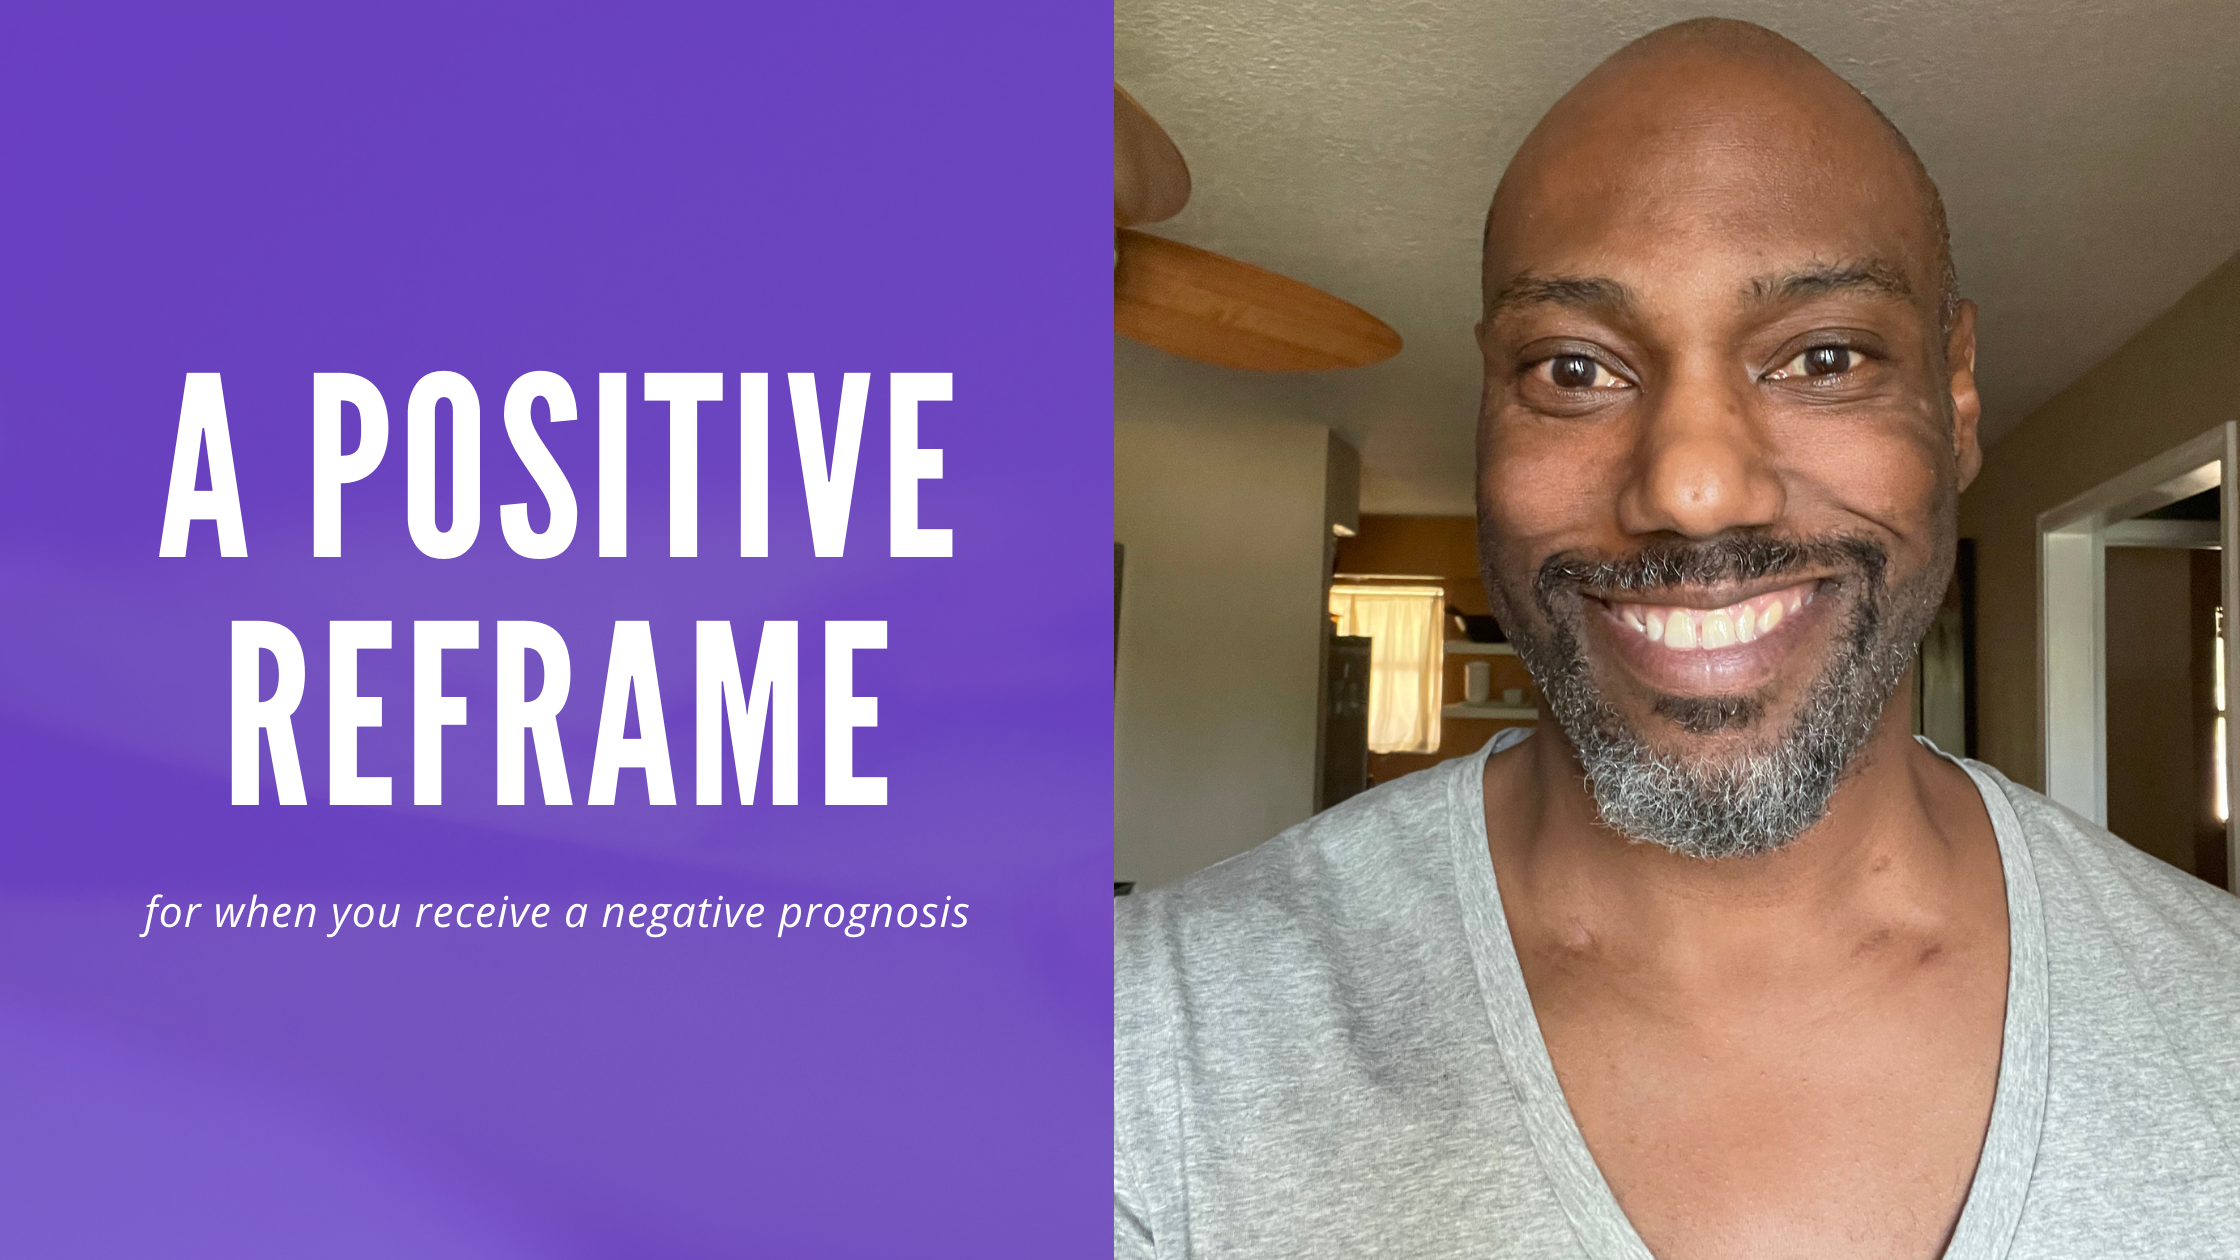 A Positive Reframe for When You Receive a Negative Prognosis